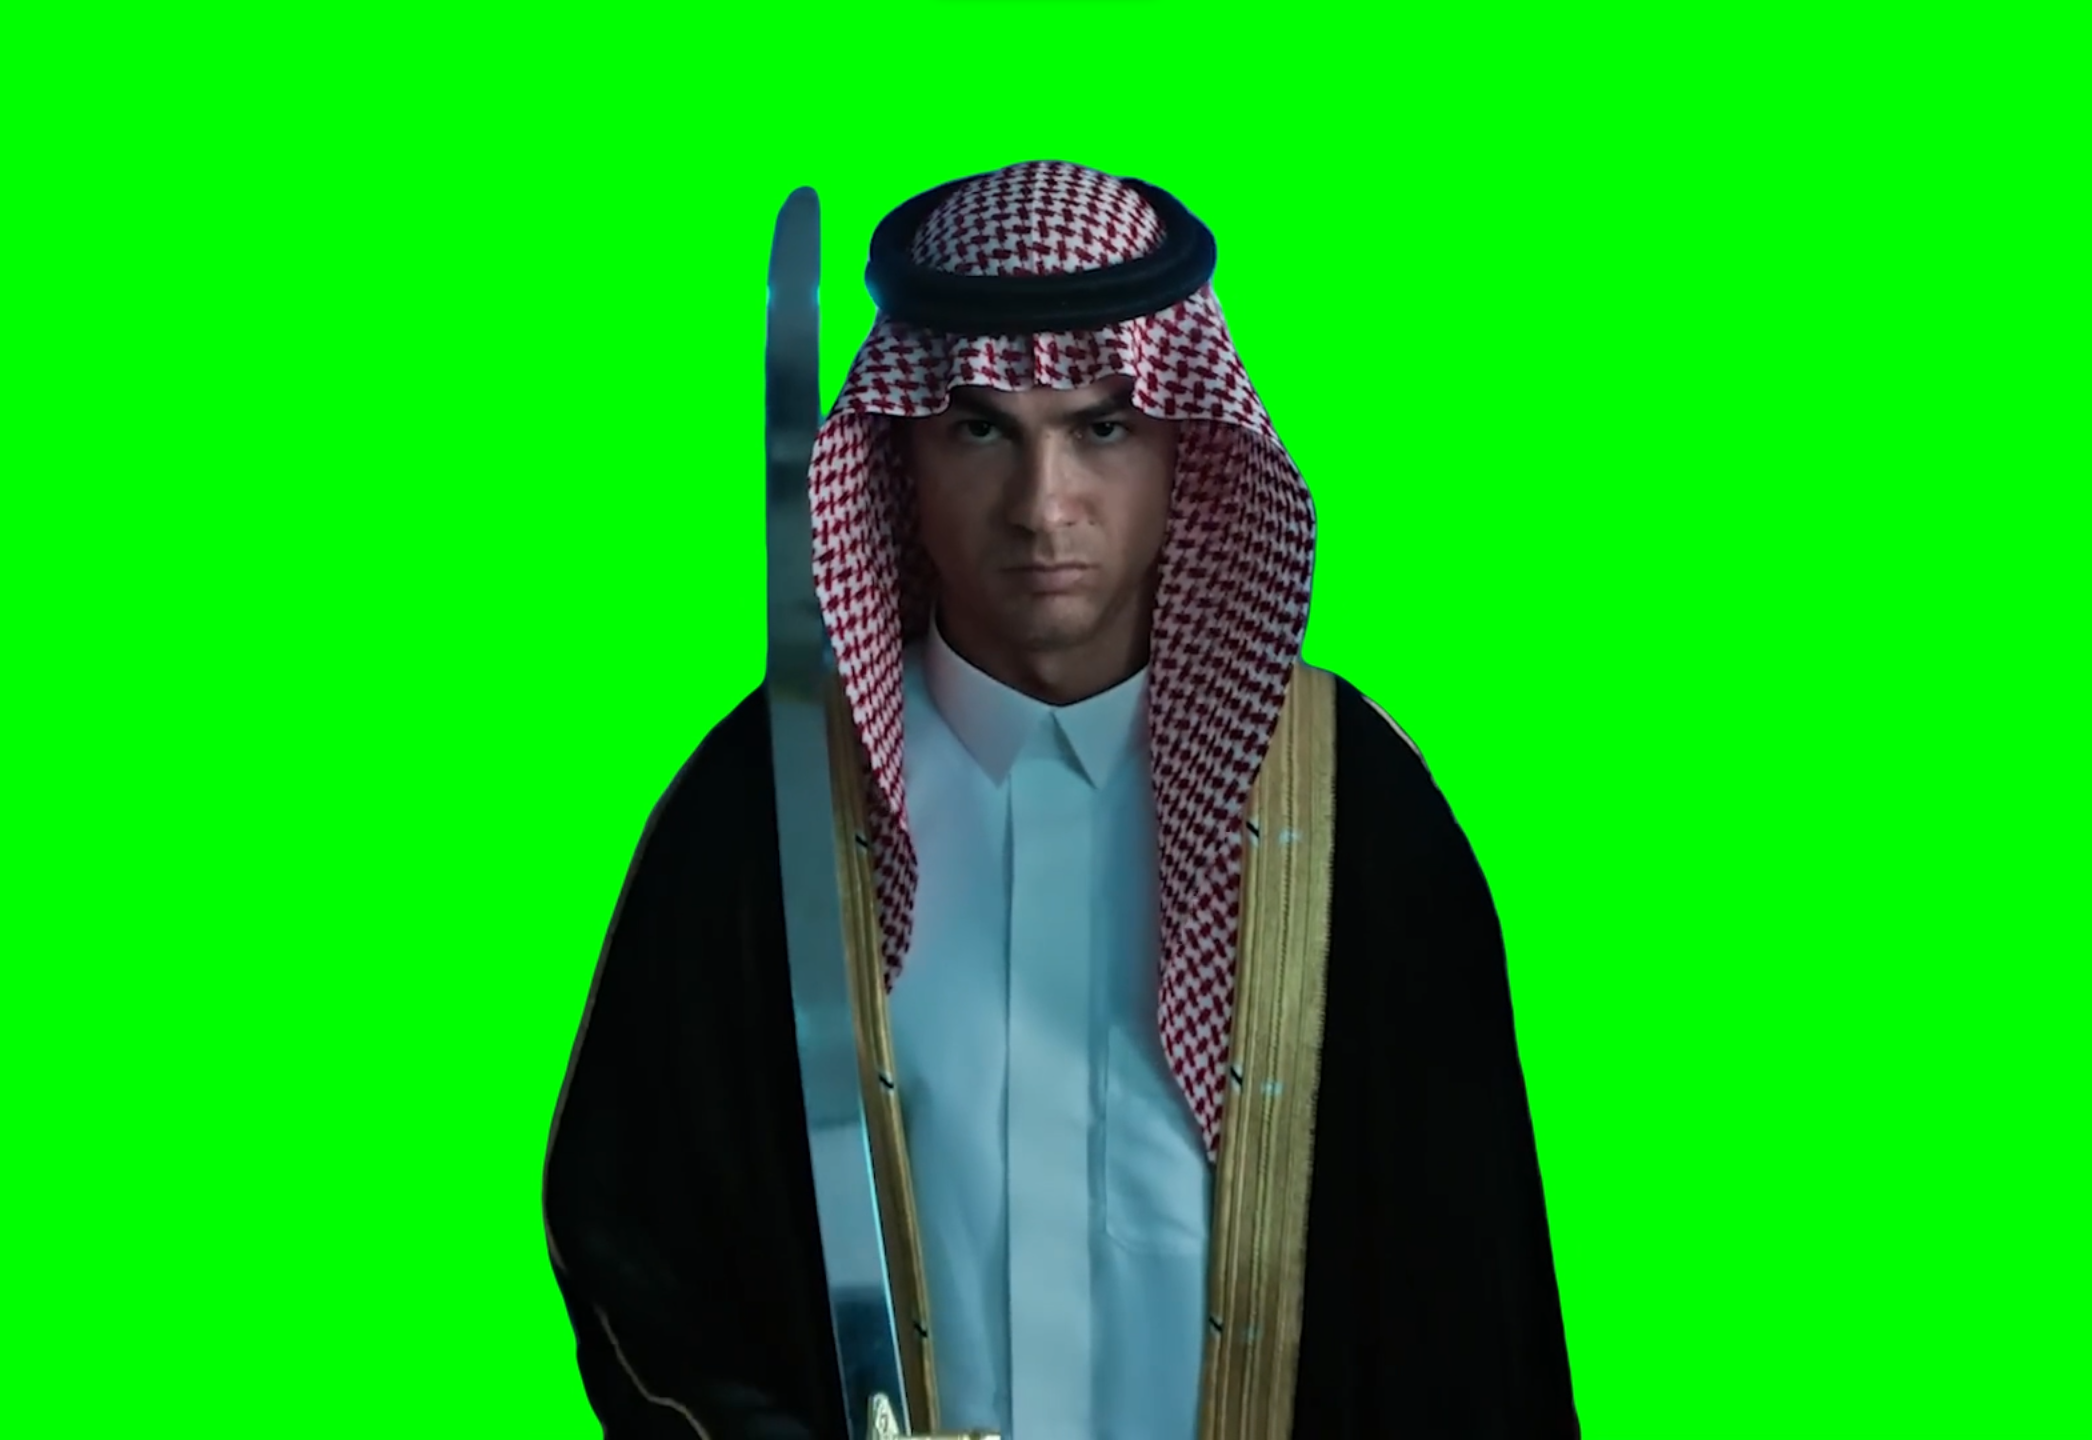 Cristiano Ronaldo - Saudi National Day 2023 commercial (Green Screen)